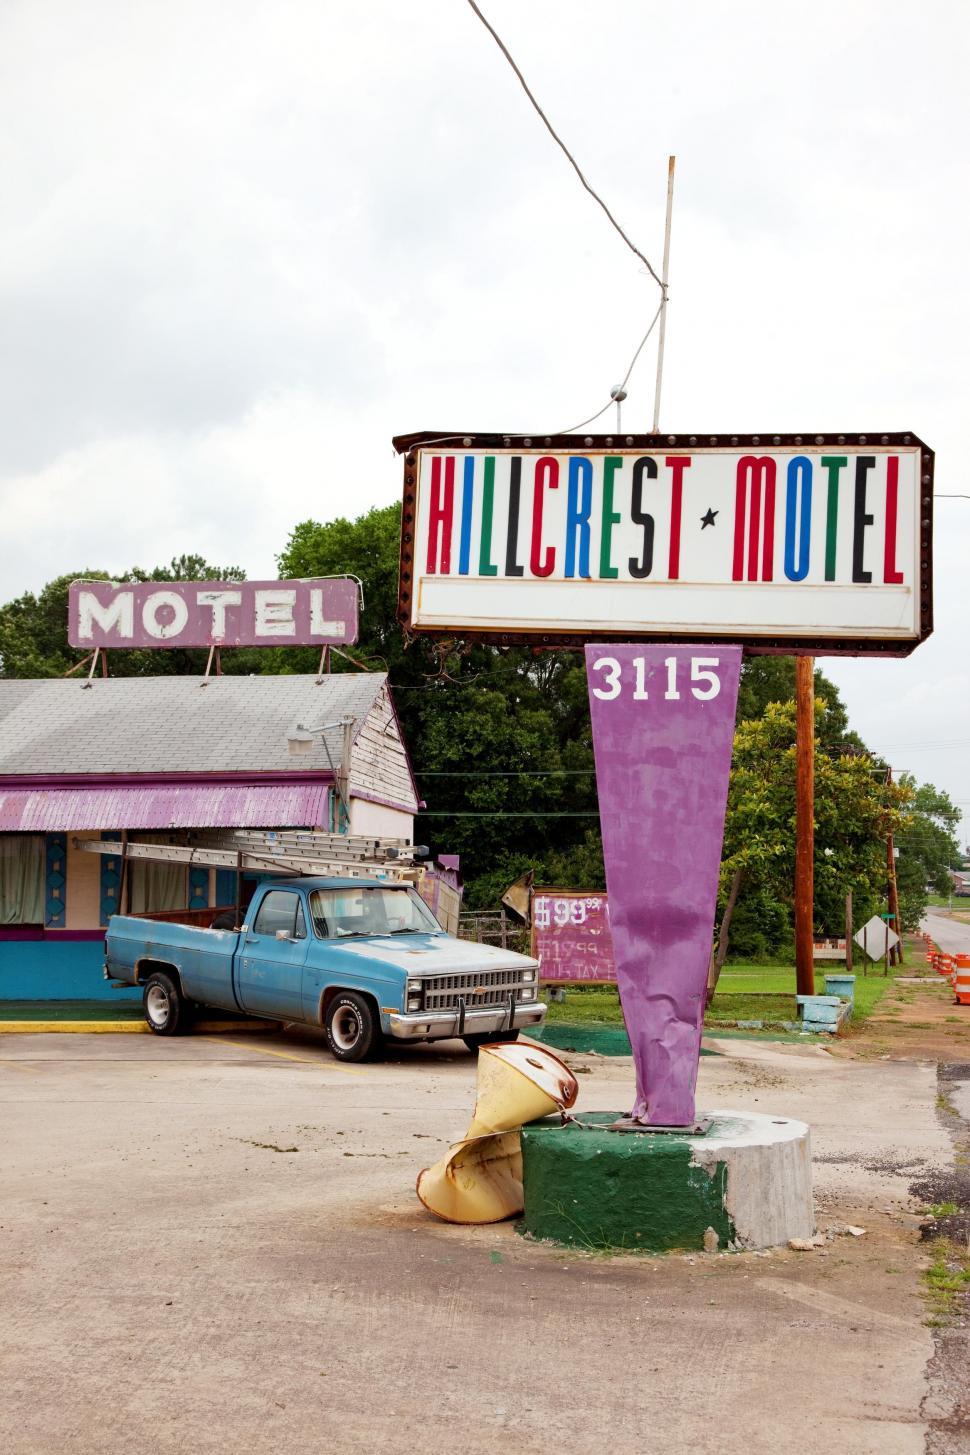 Free Image of Hillcrest Motel  